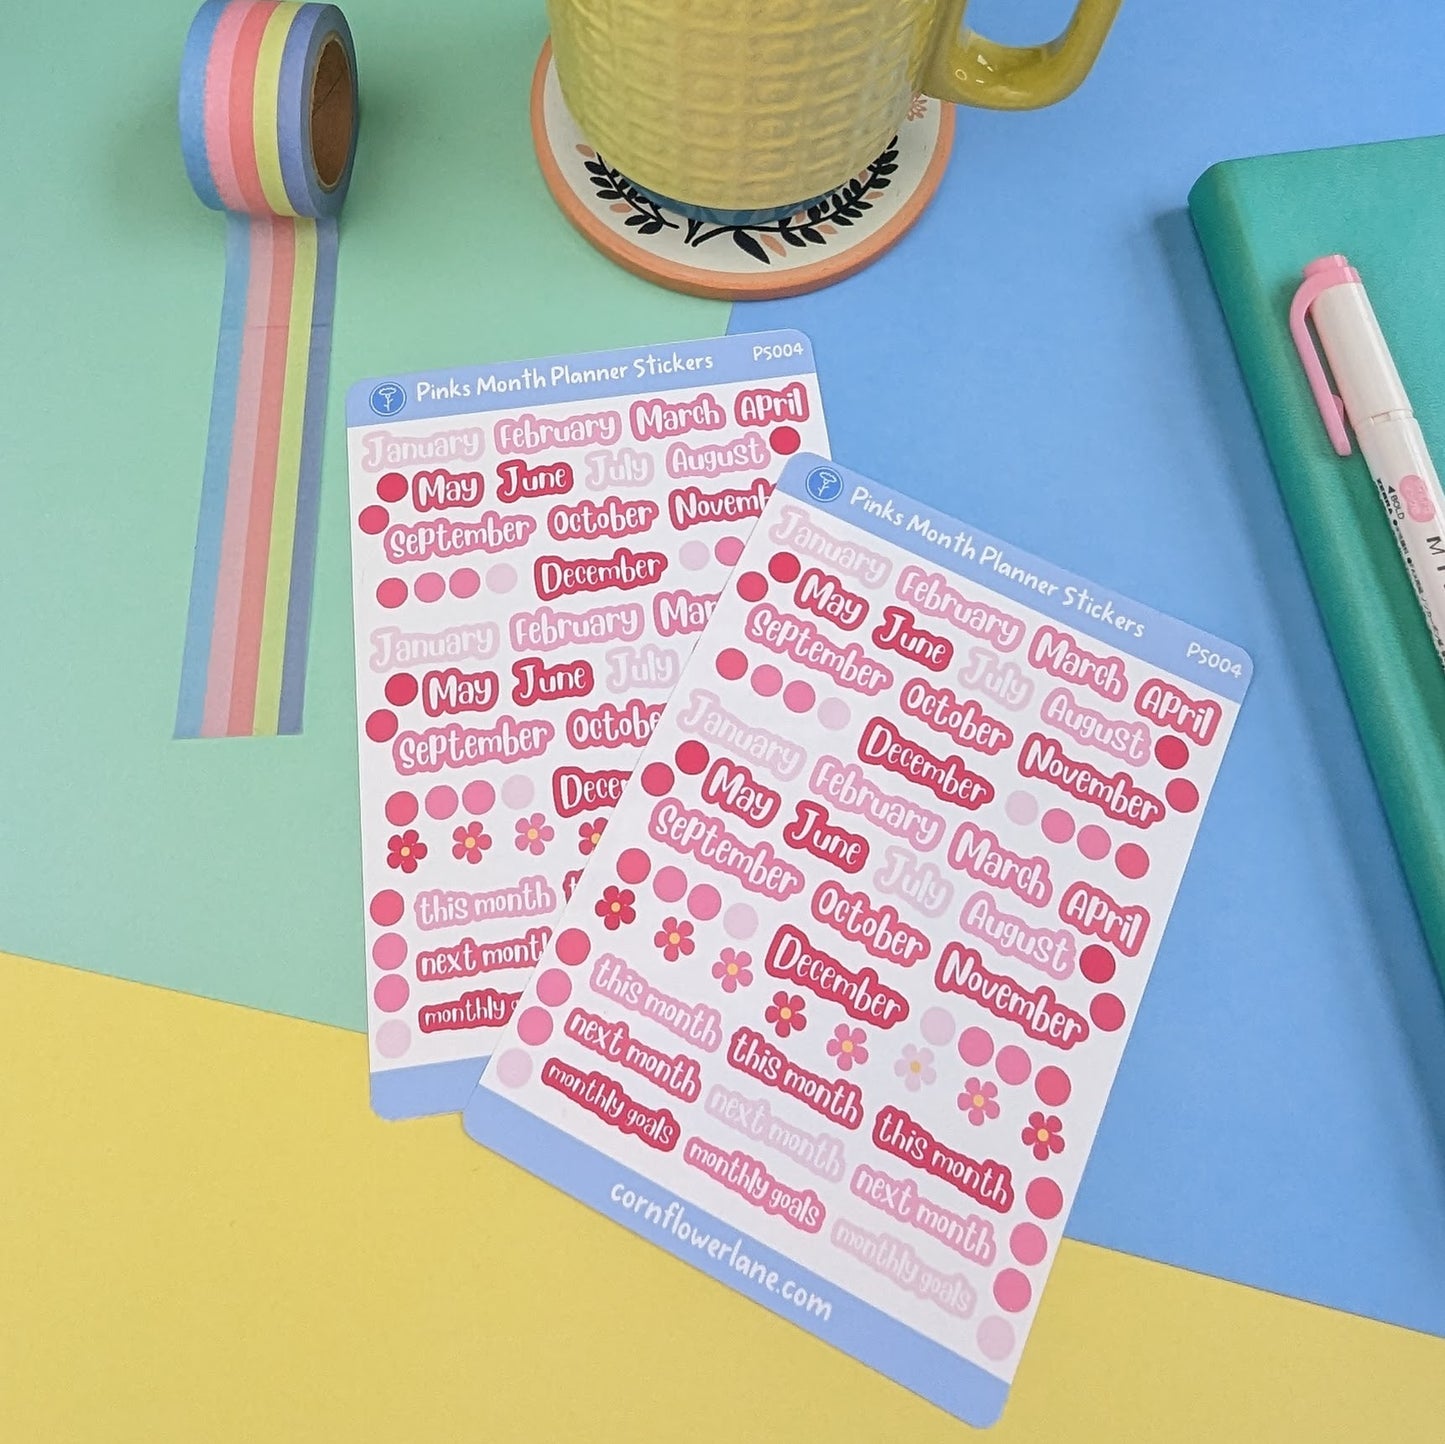 Pinks Month Planner Sticker Sheet